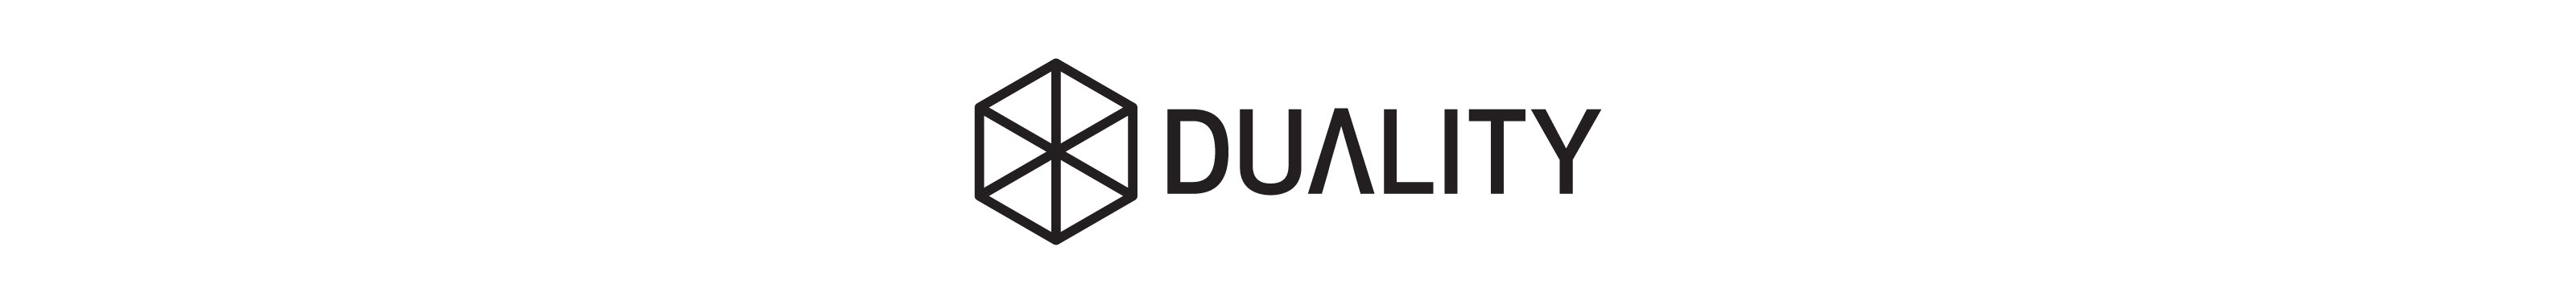 Duality Studio ®'s profile banner